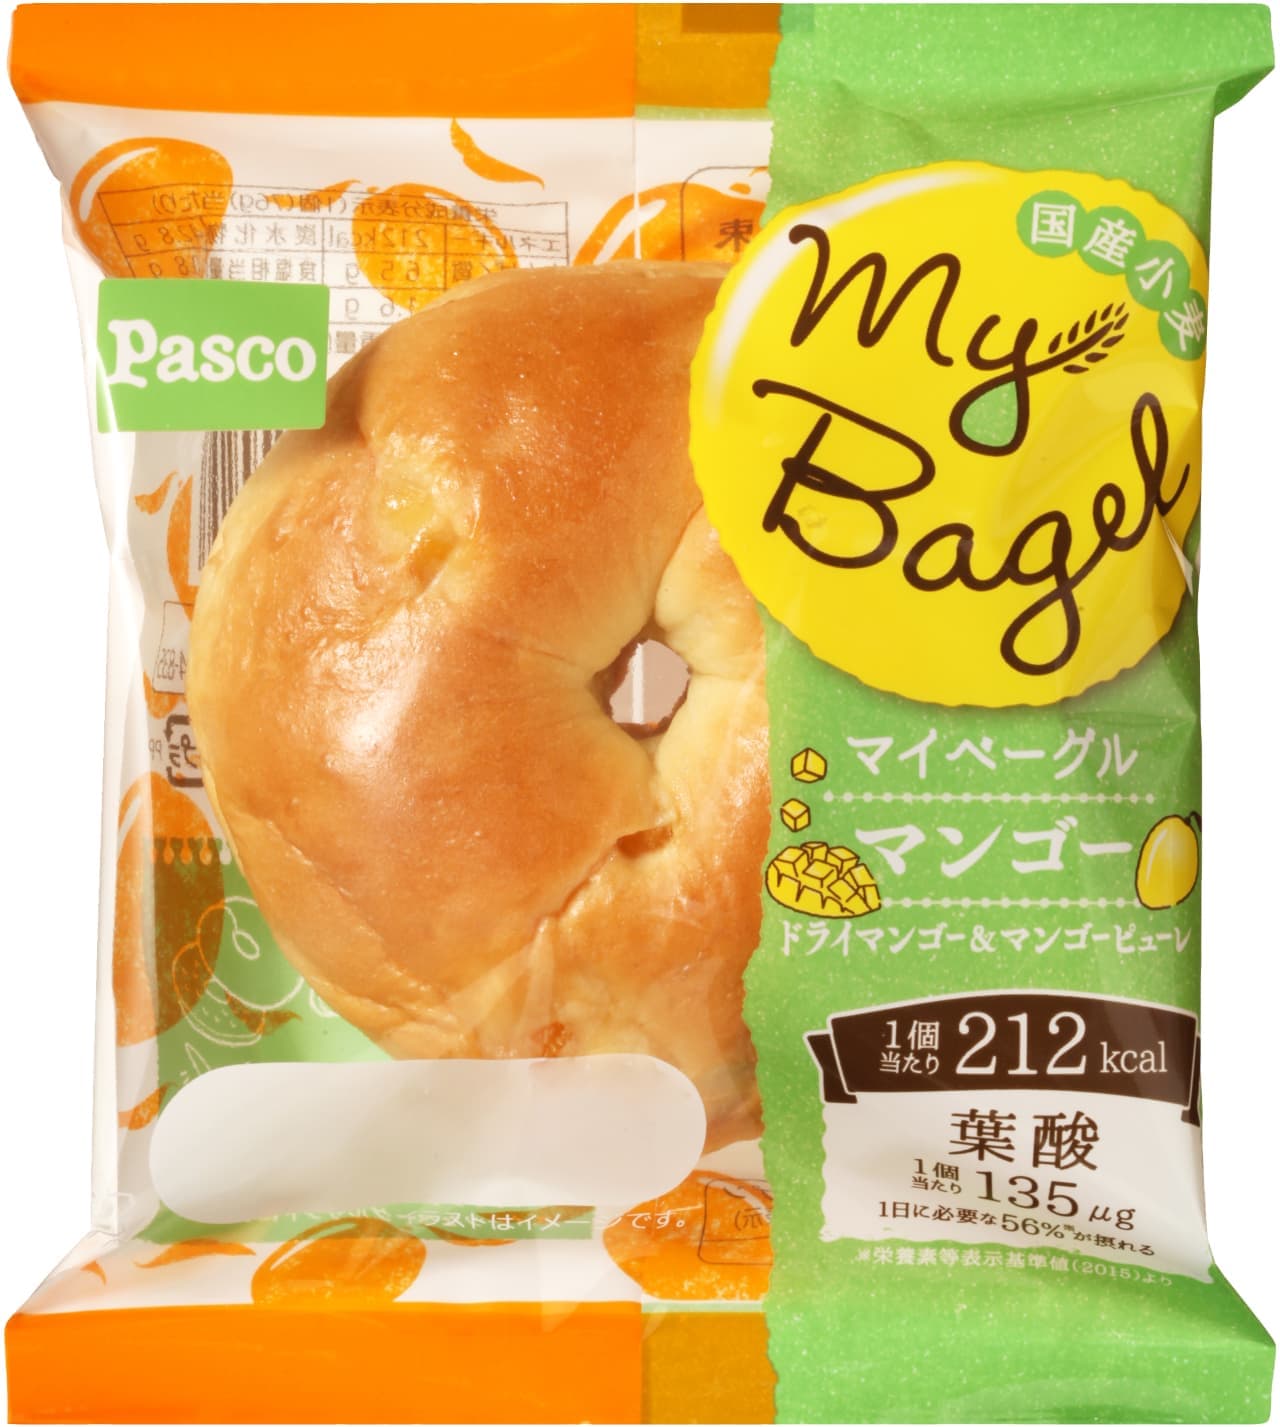 Pasco "My Bagel Mango